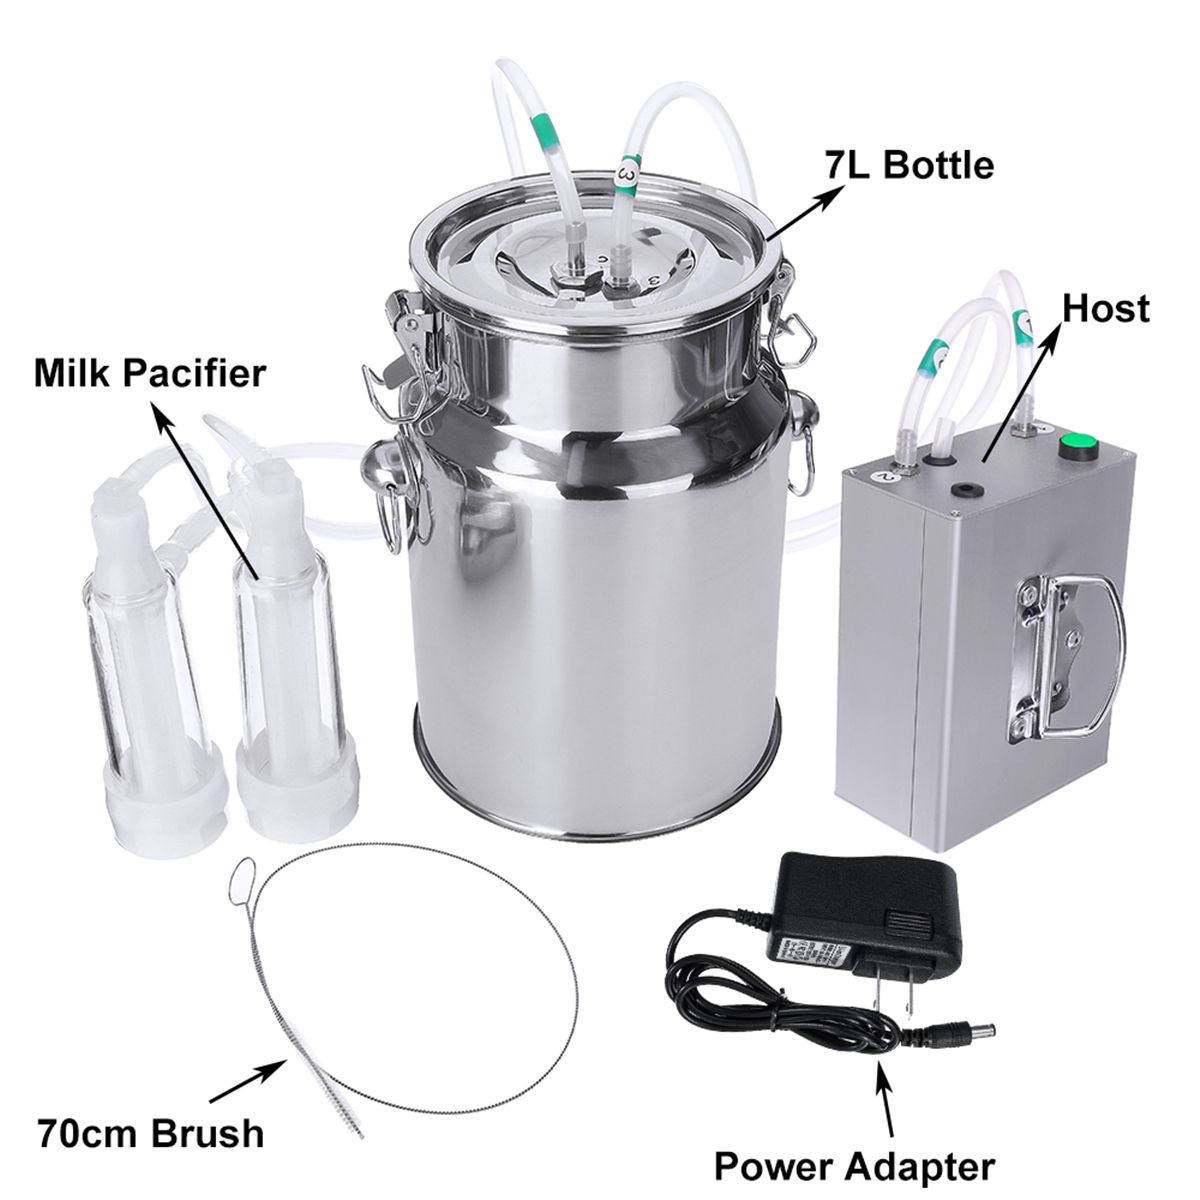 7L-Electric-Milking-Machine-Vacuum-Pump-Cow-Goat-Automatically-Milker-Device-1757815